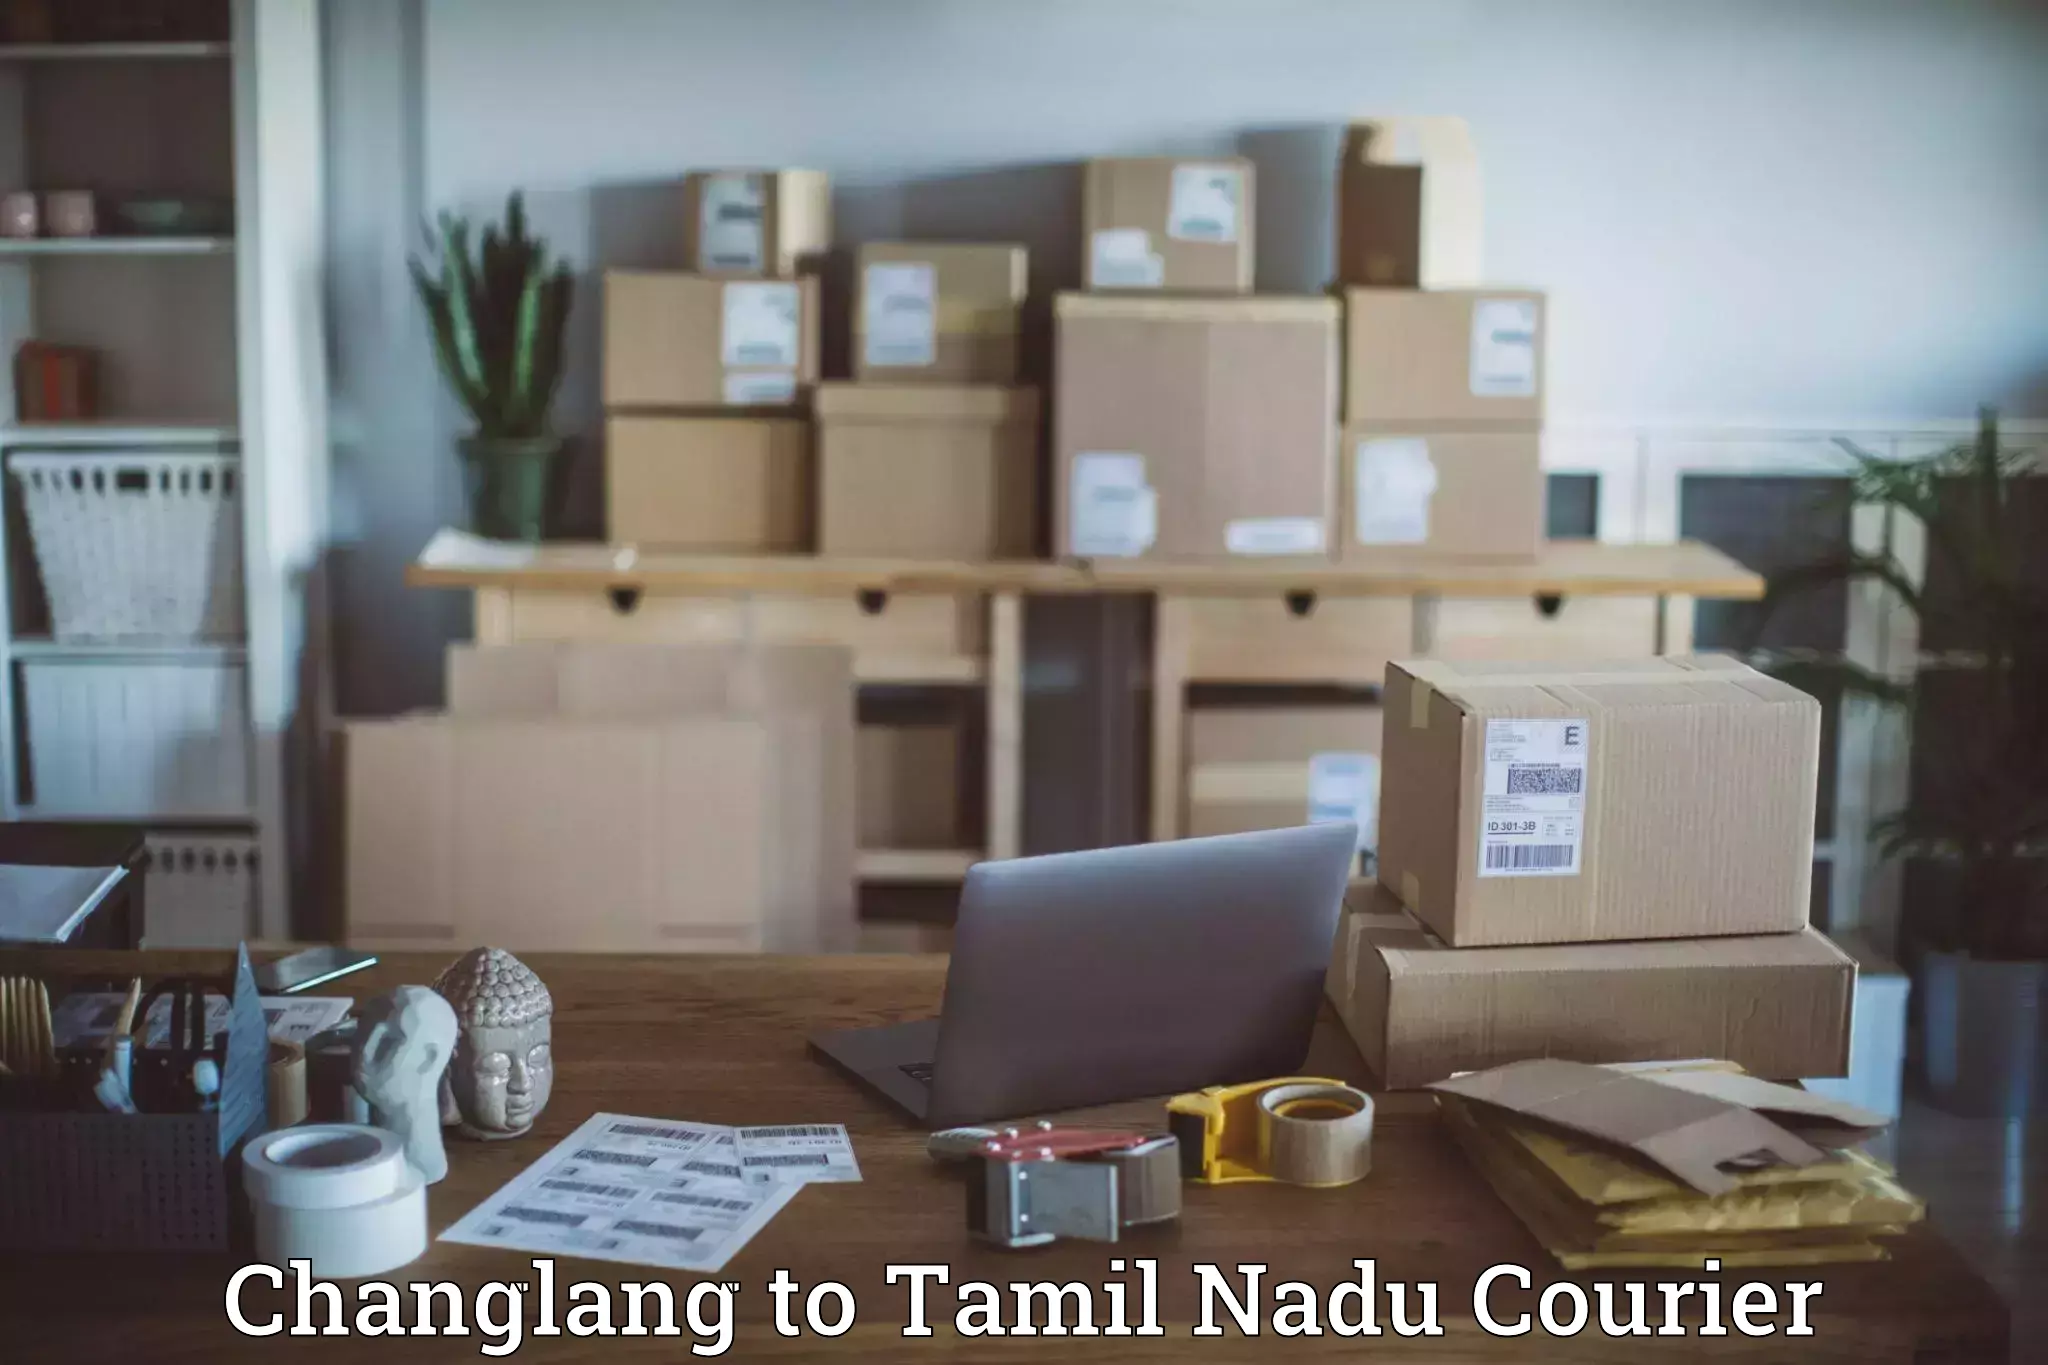 Express mail service Changlang to Tamil Nadu